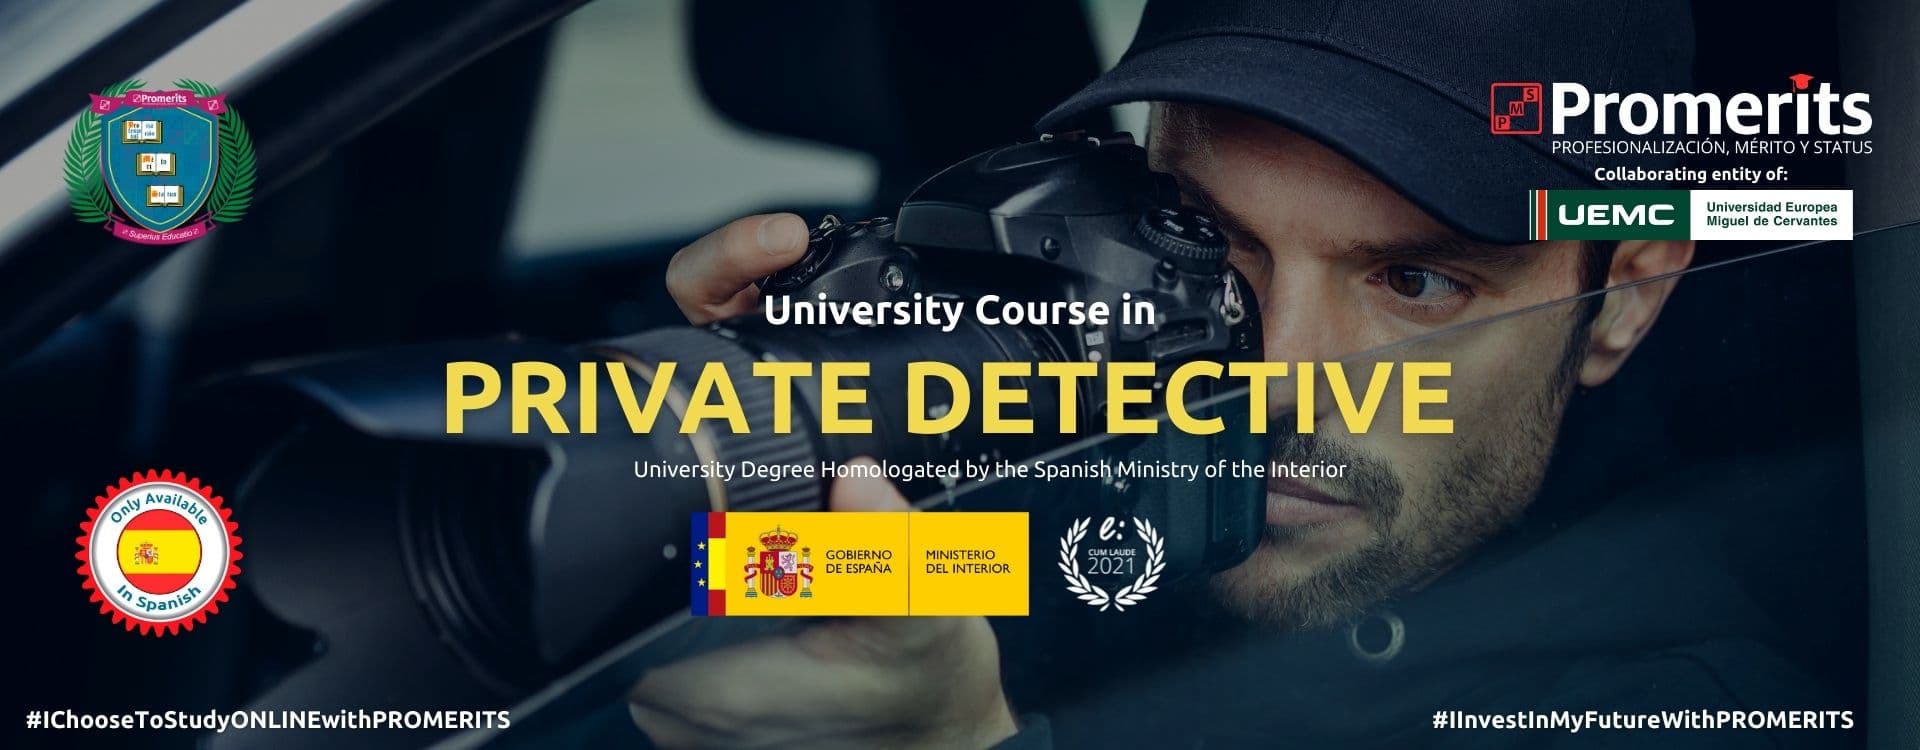 University Course in Private Detective